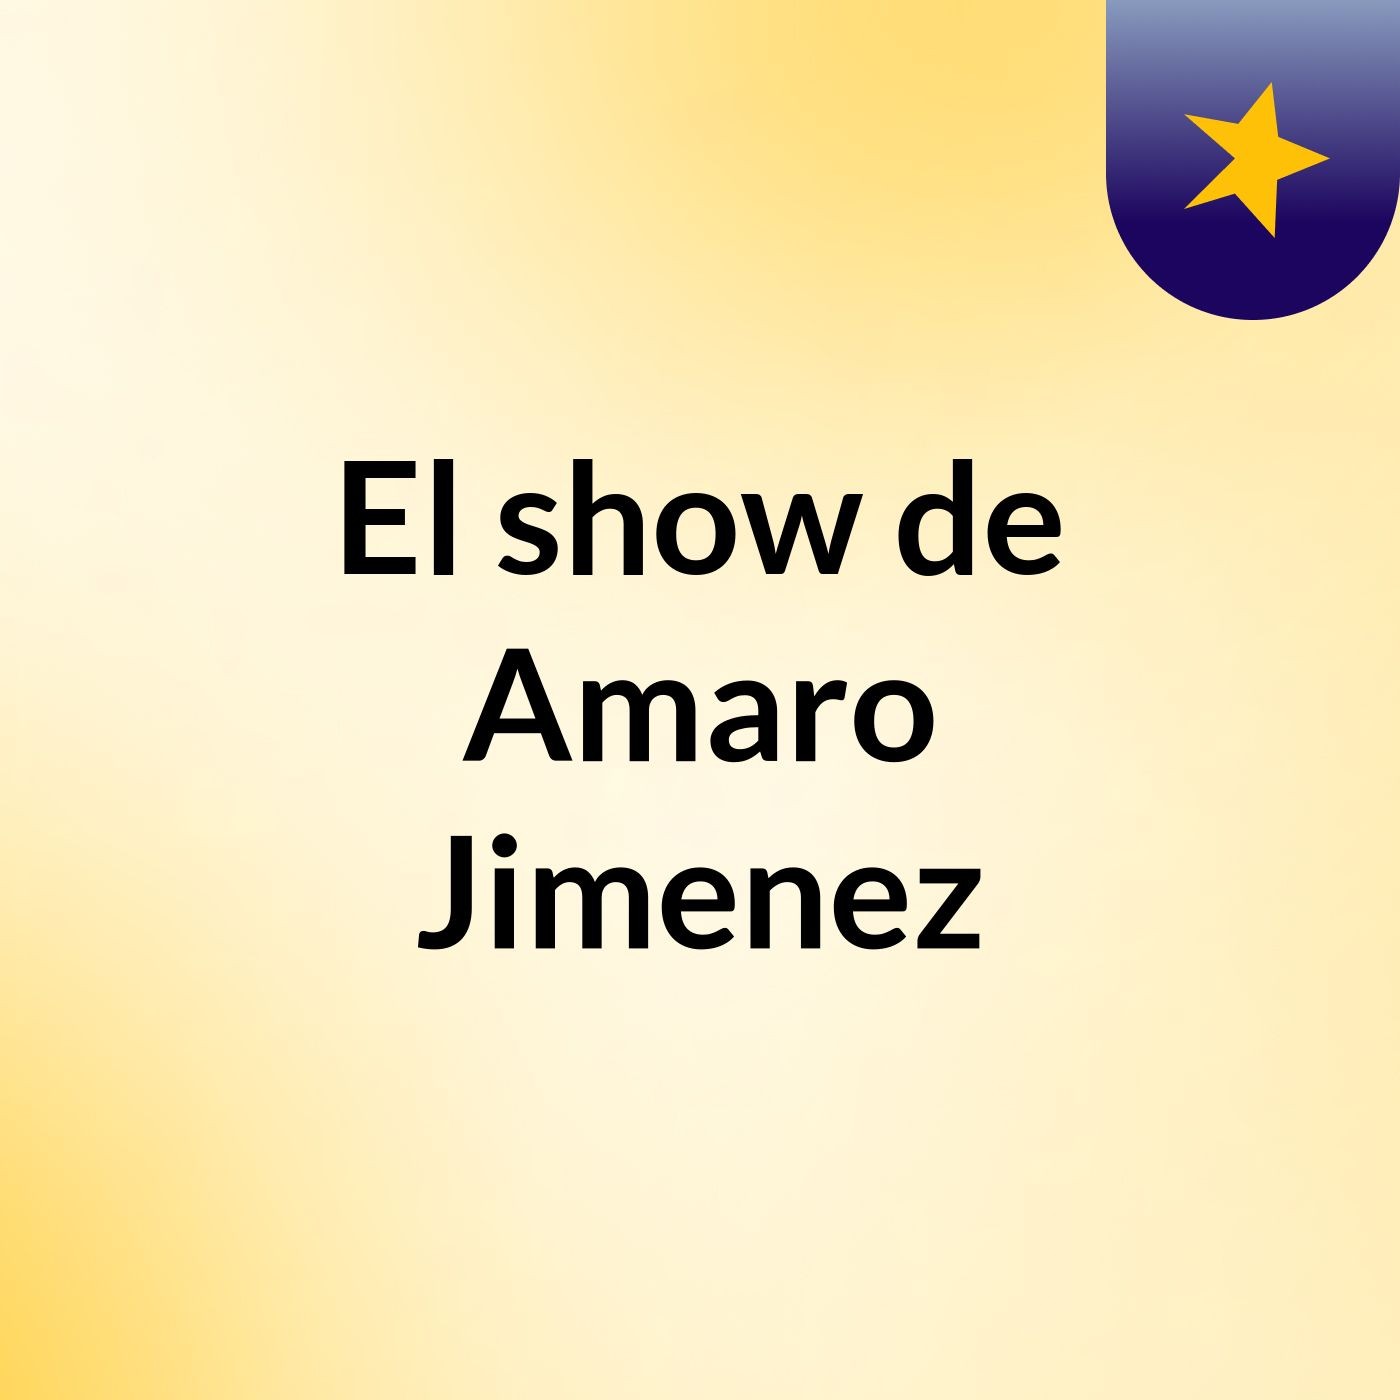 El show de Amaro Jimenez